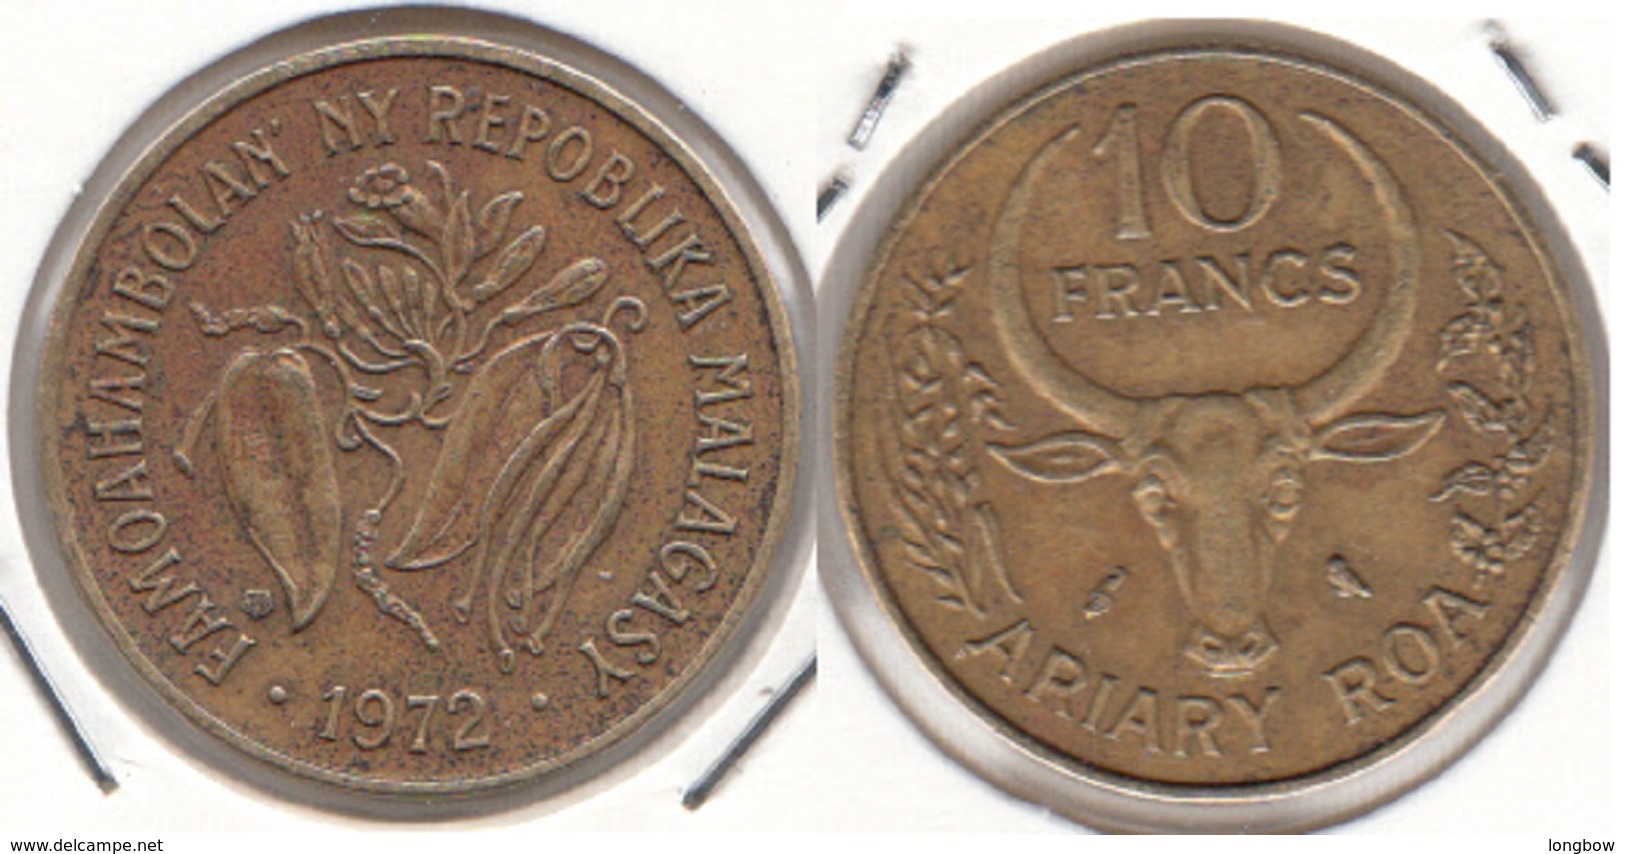 Madagascar 10 Francs 1972 F.A.O. KM#11 - Used - Madagascar